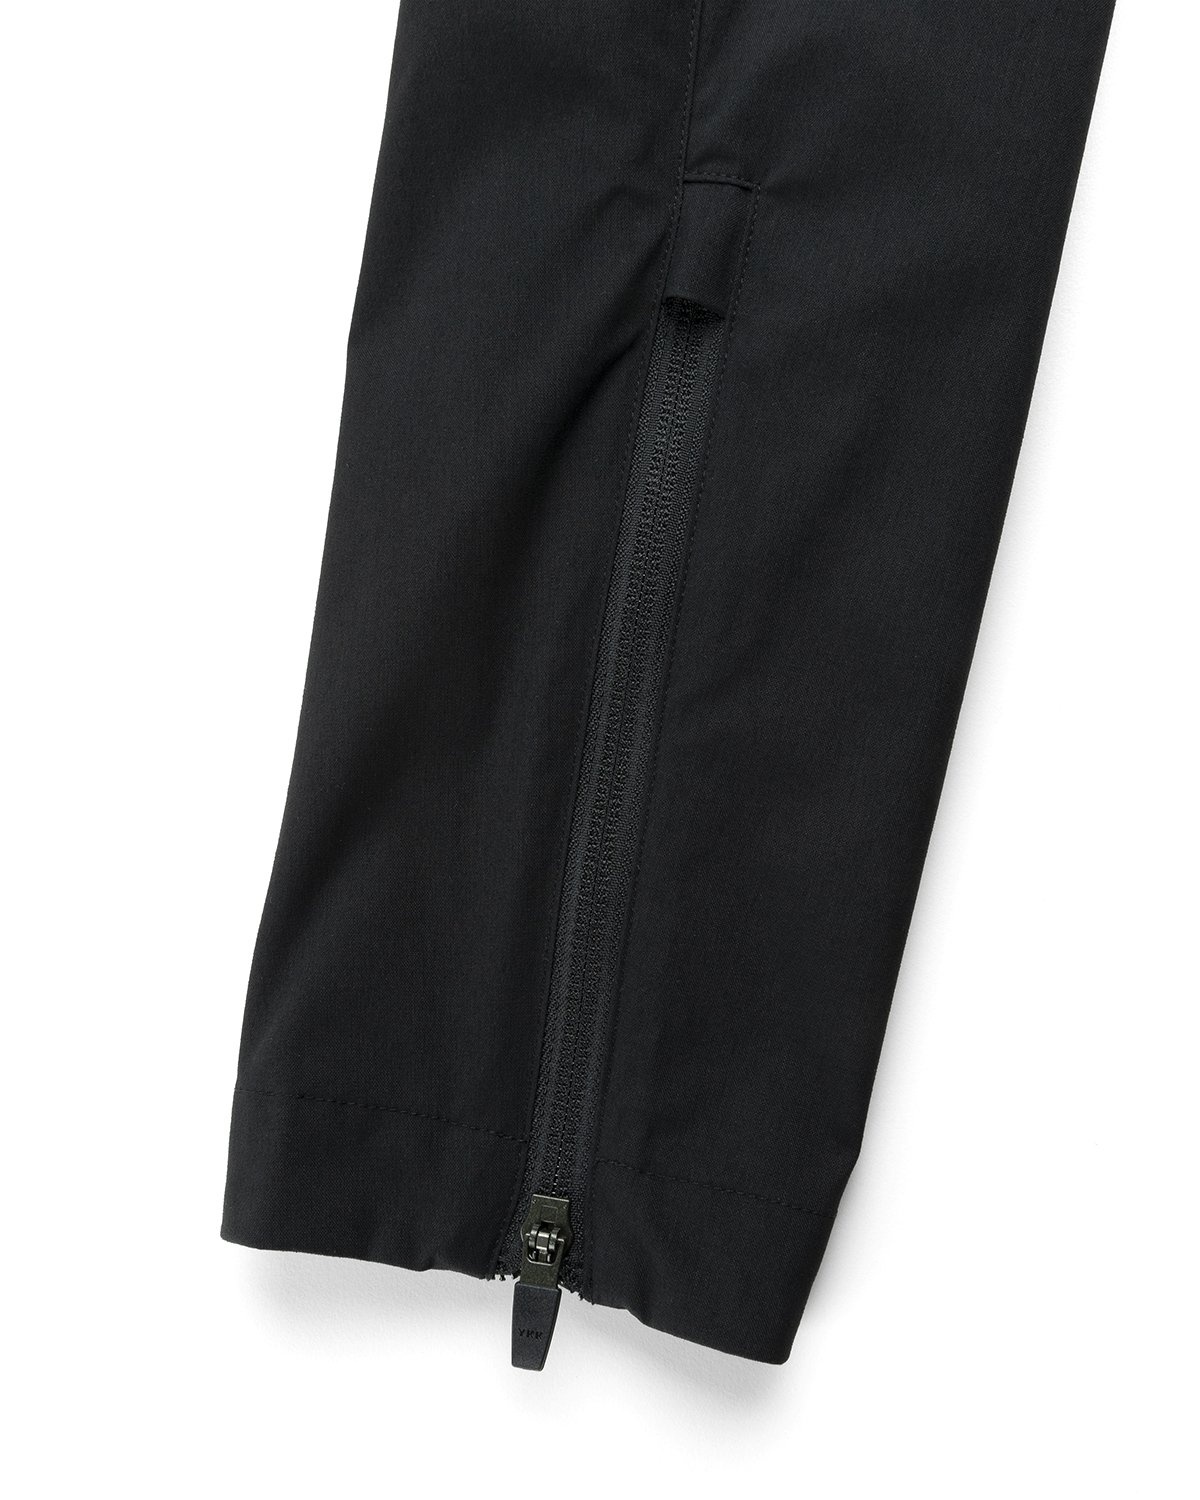 ACRONYM – P10-E Pant Black - Cargo Pants - Black - Image 4